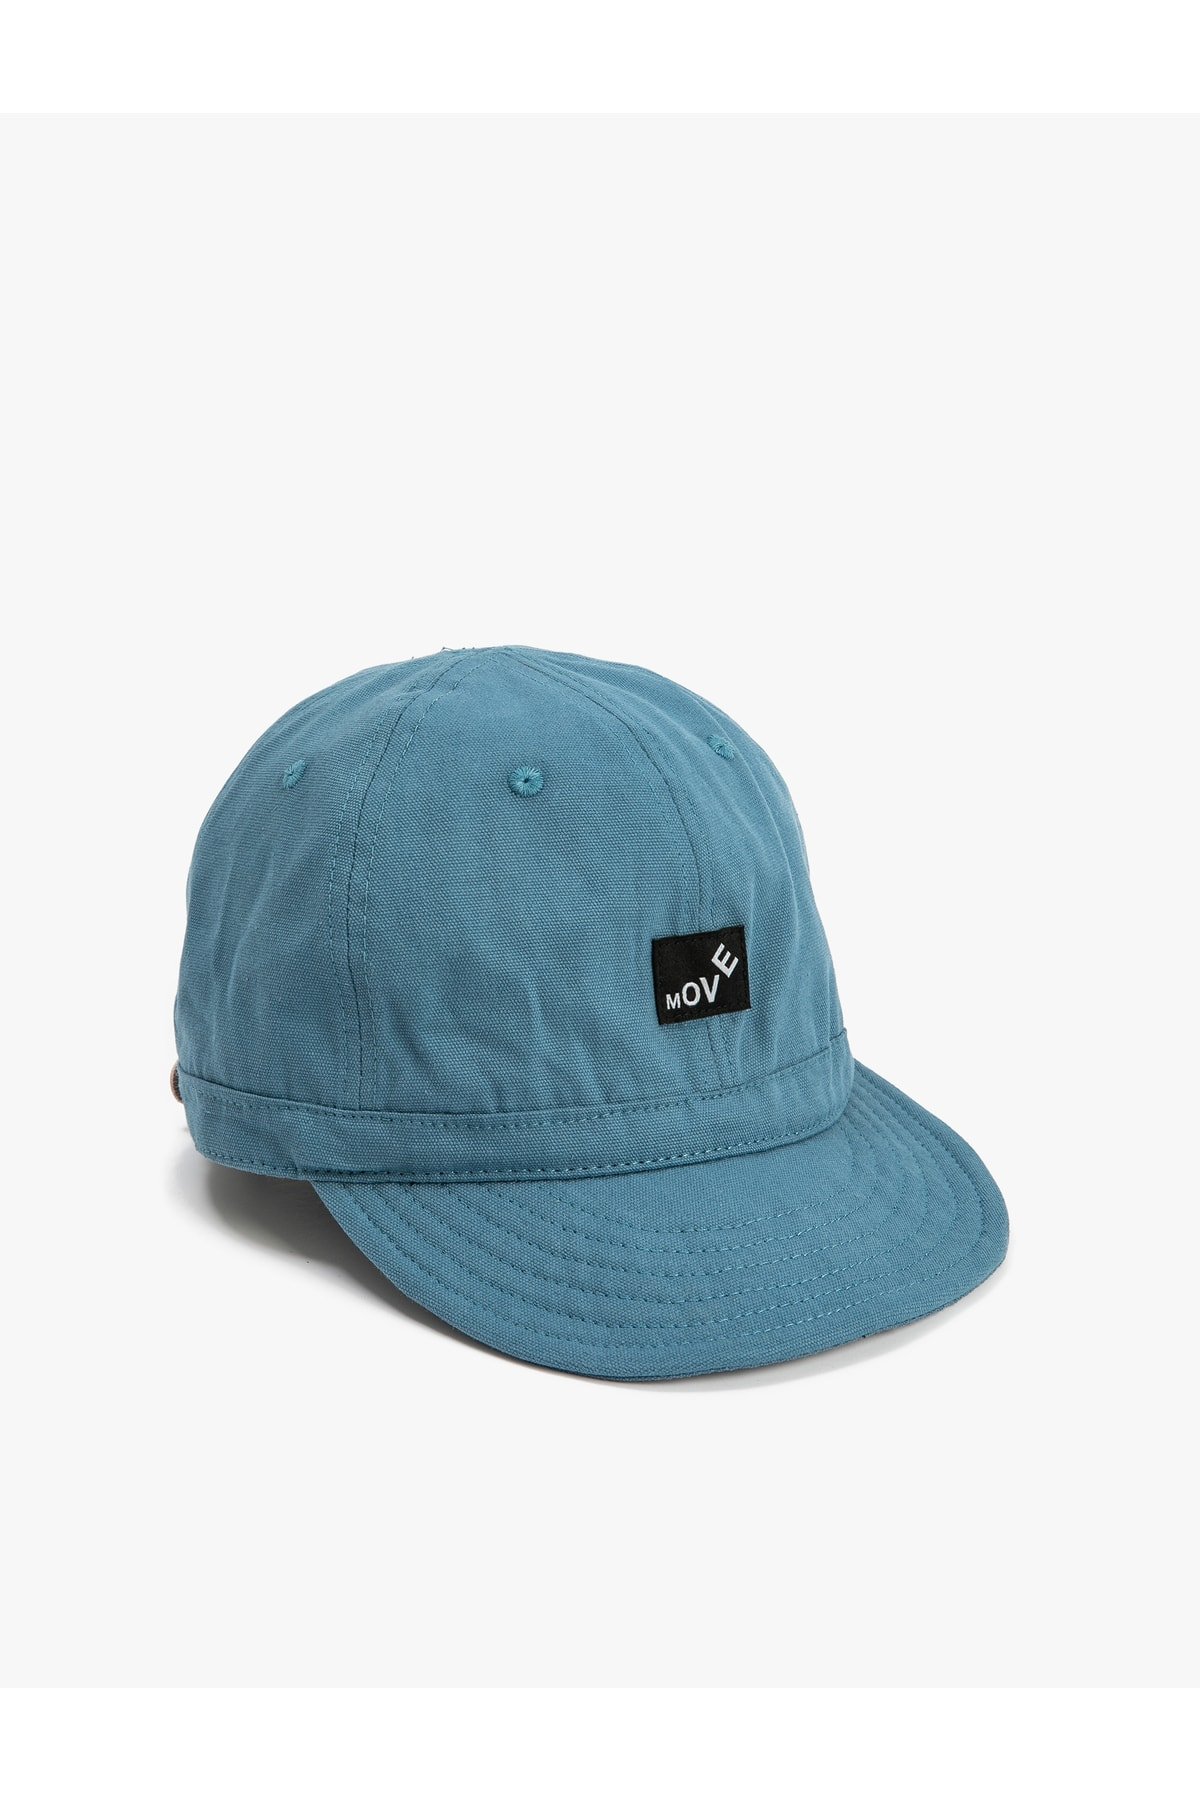 Koton Cap Hat Slogan Embroidered